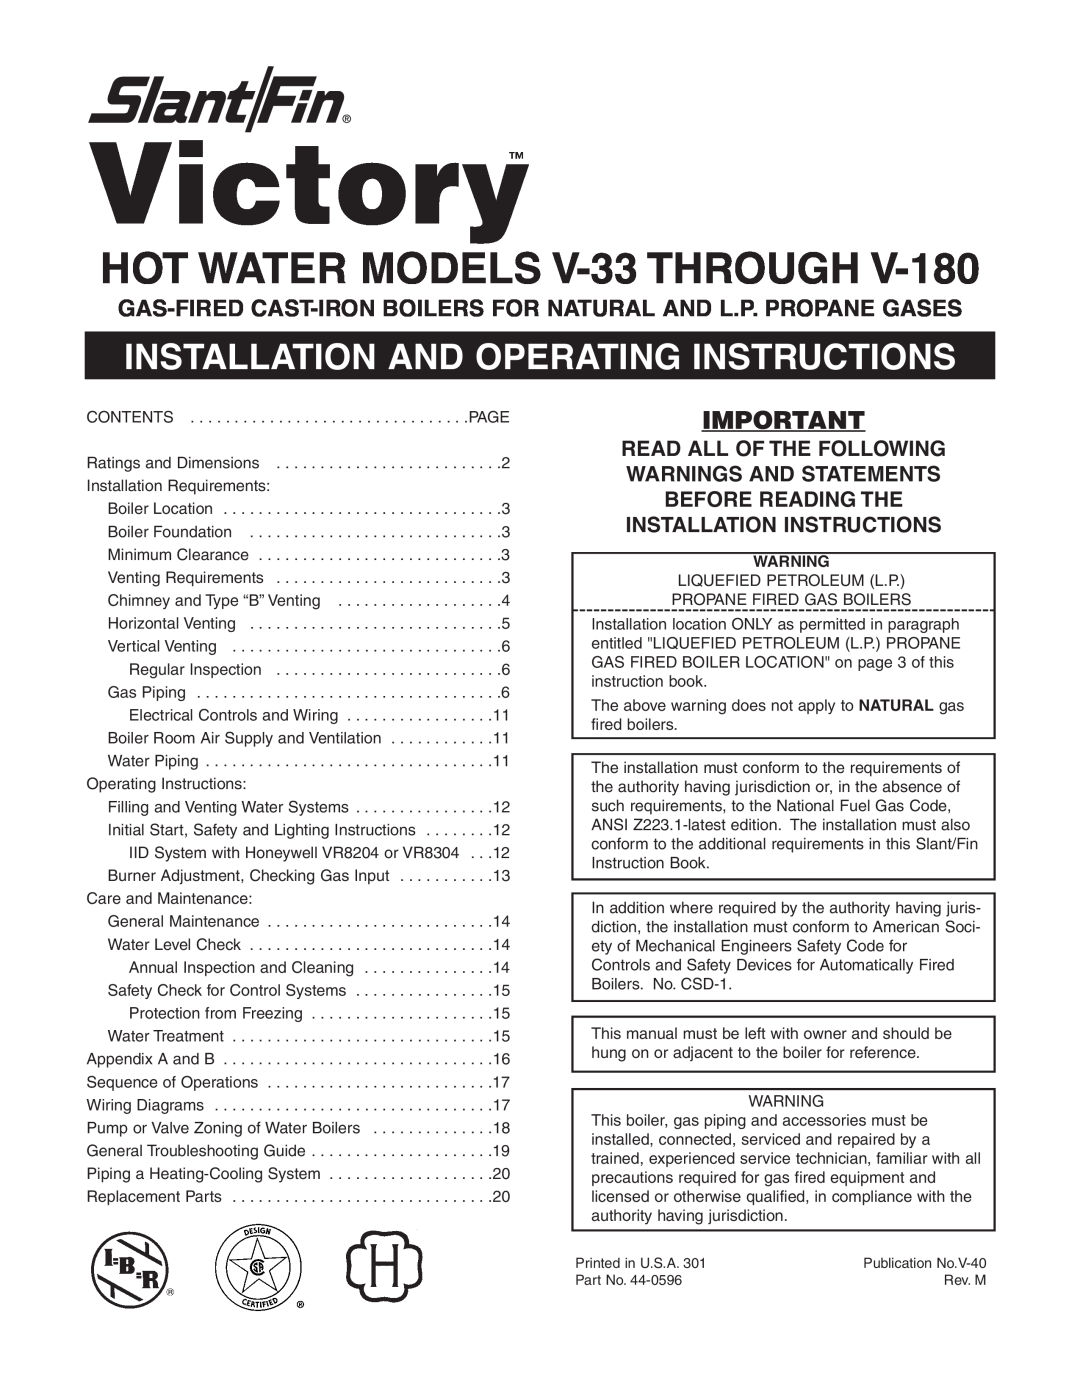 Slant/Fin V-180 operating instructions Victory, HOT WATER MODELS V-33THROUGH 